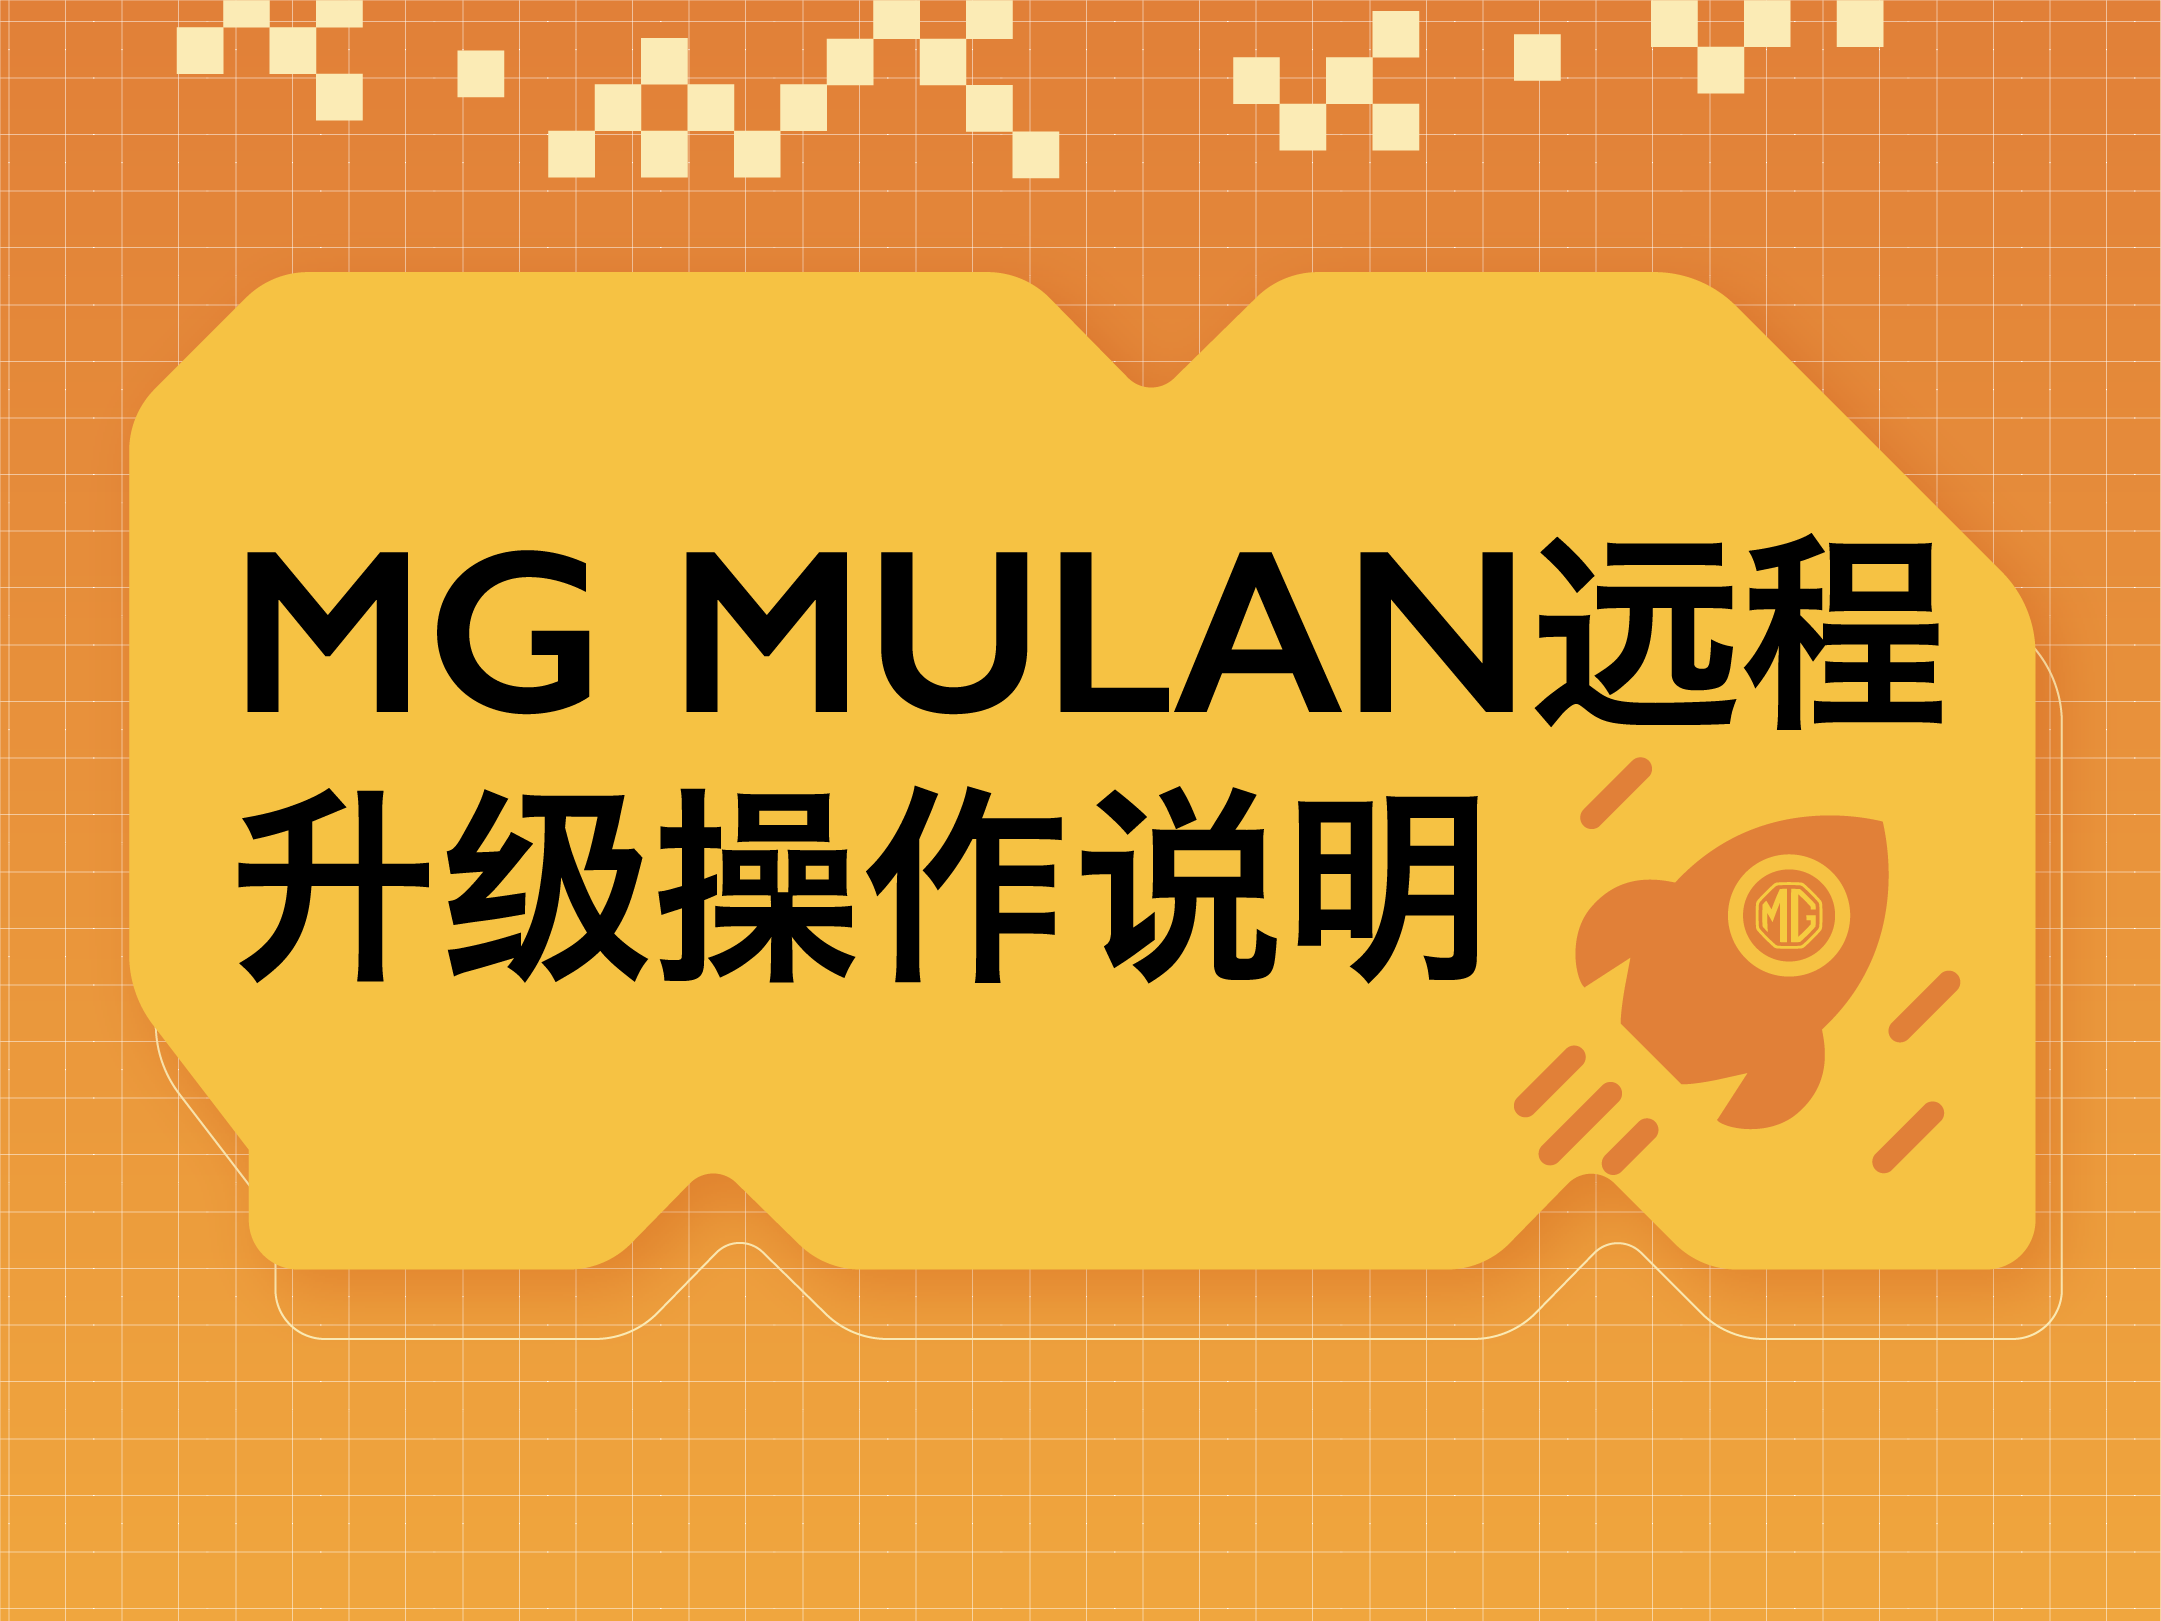 MG MULAN 远程升级操作说明